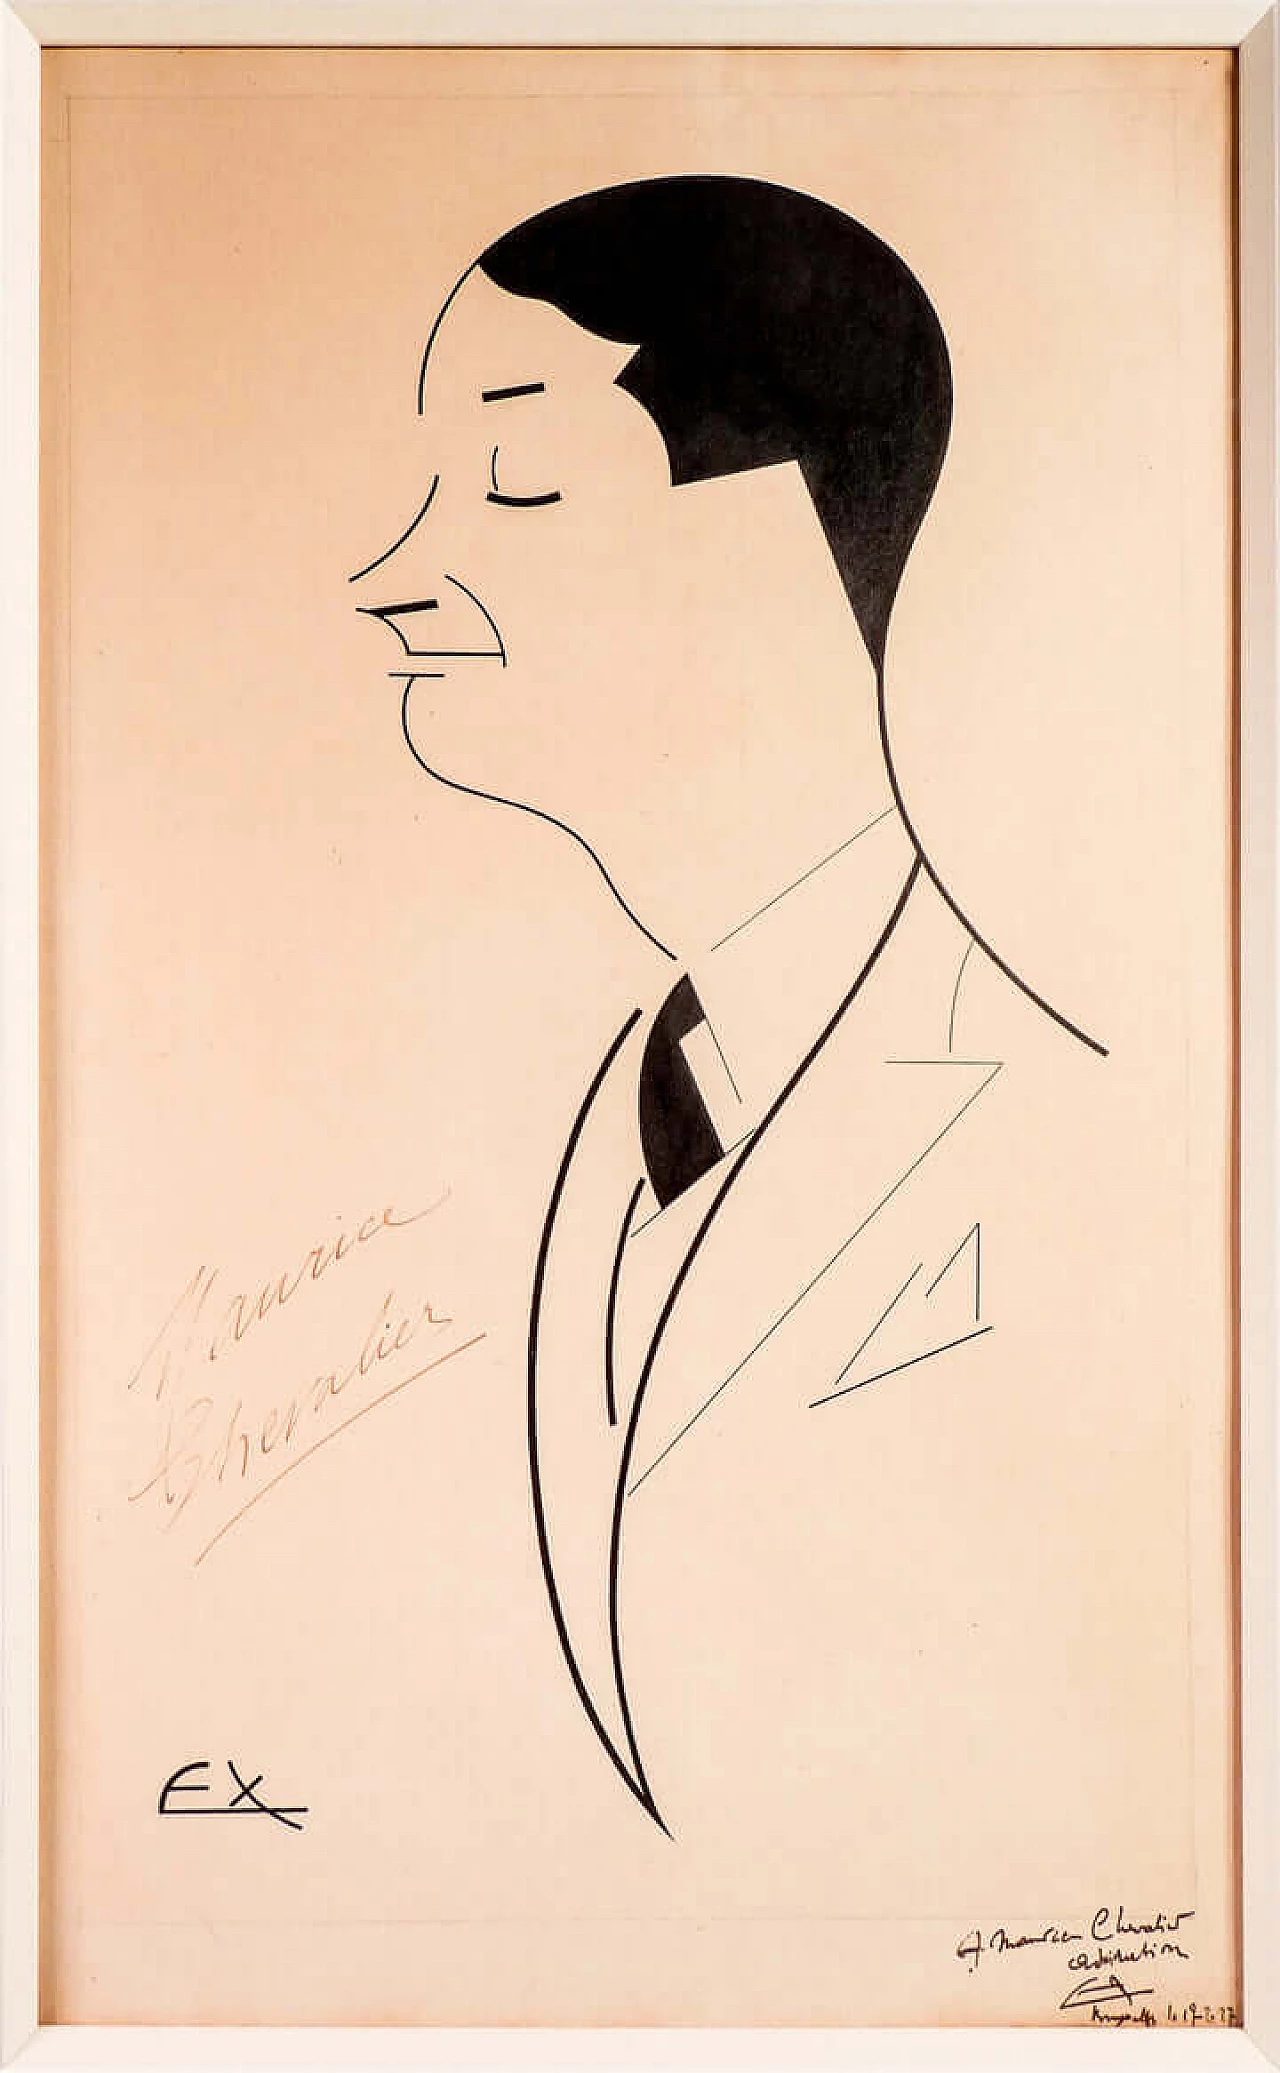 Ex, Maurice Chevalier portrait, Indian ink on paper, 1927 2